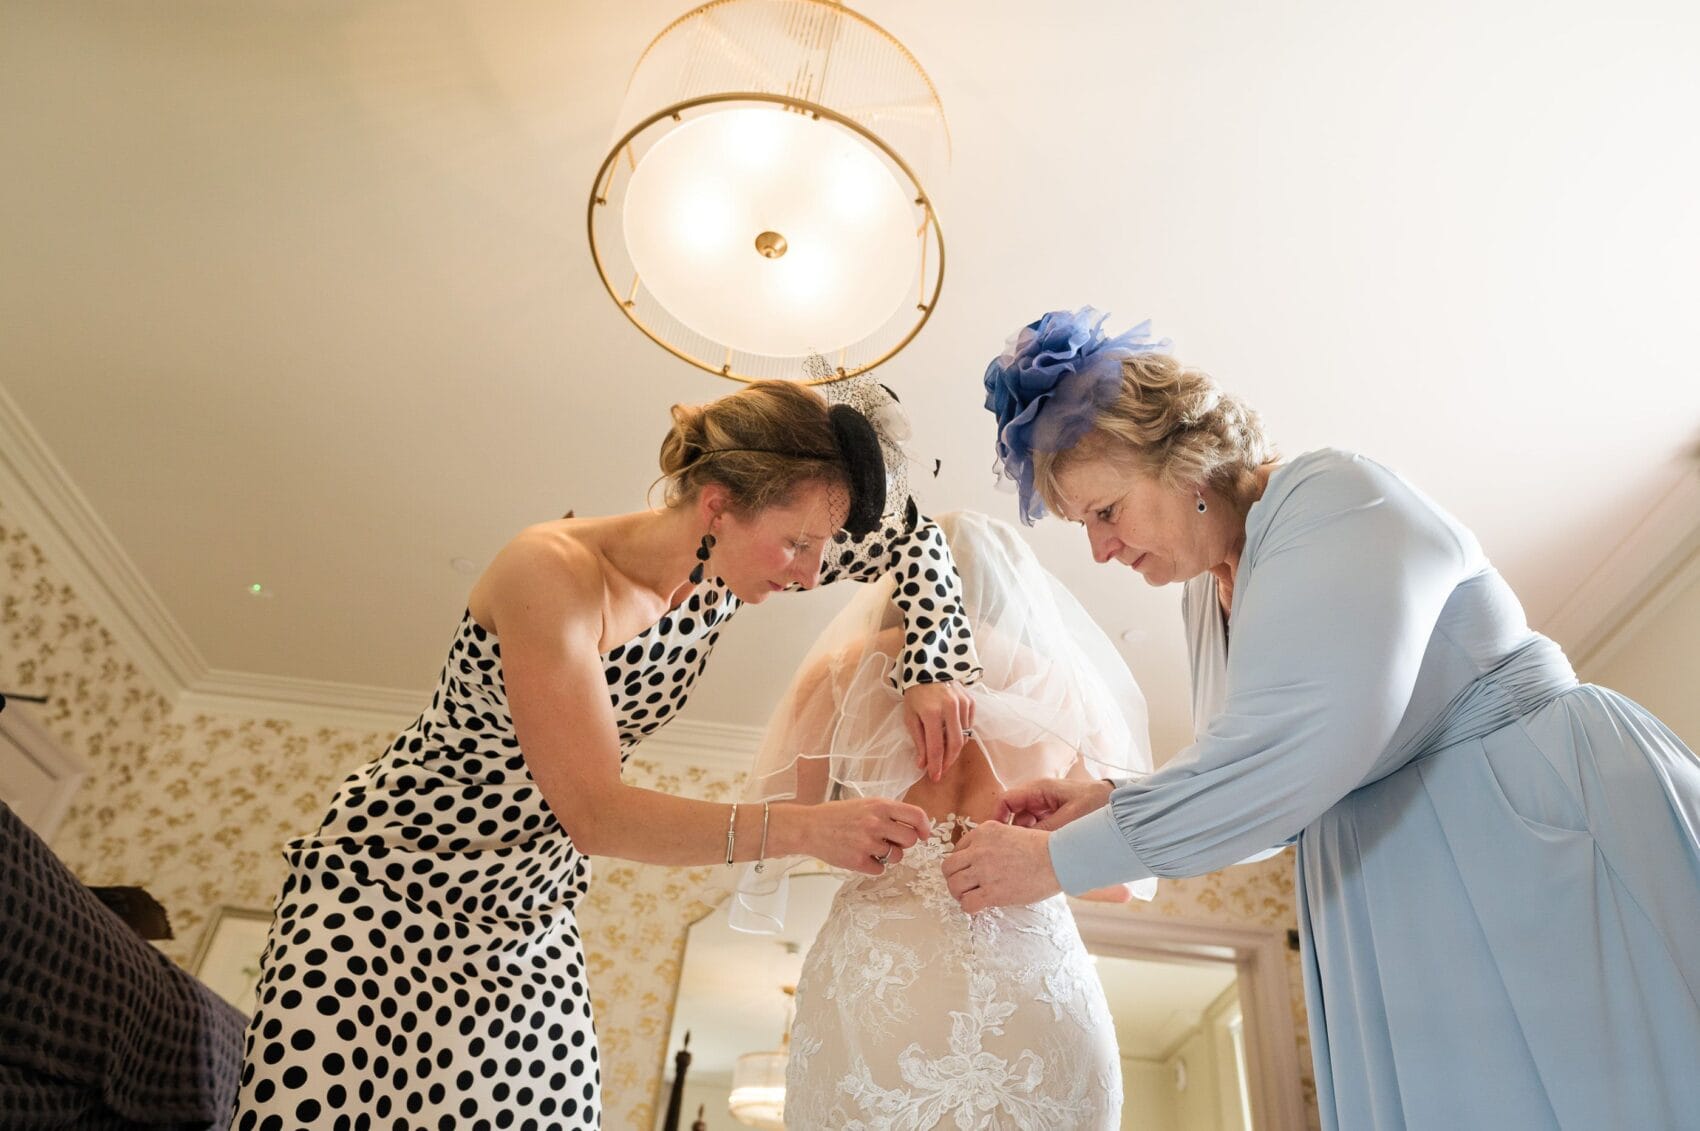 Mum and friend help do up the wedding dress